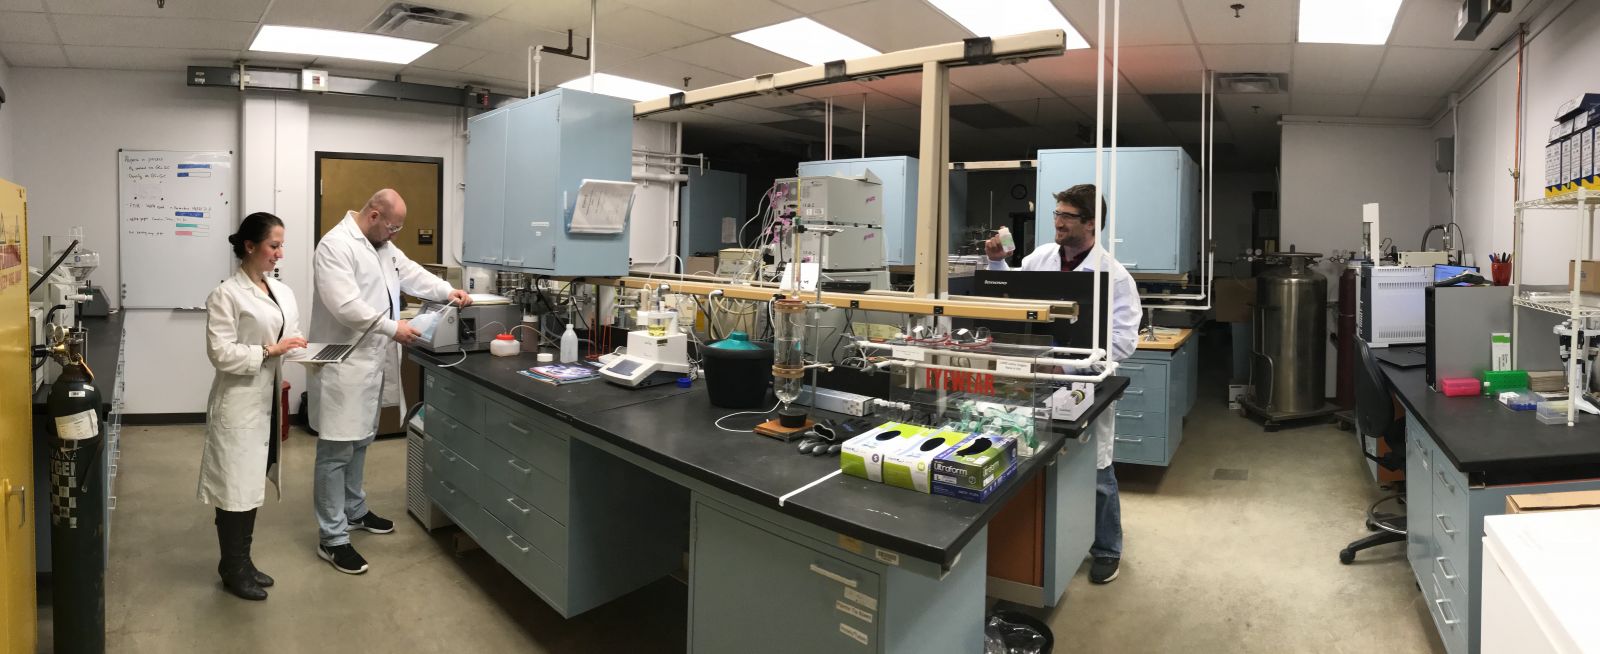 Gozdem Kilaz, Petr Vozka, and Frederick Ford work in the FLORE lab (2018 photo)